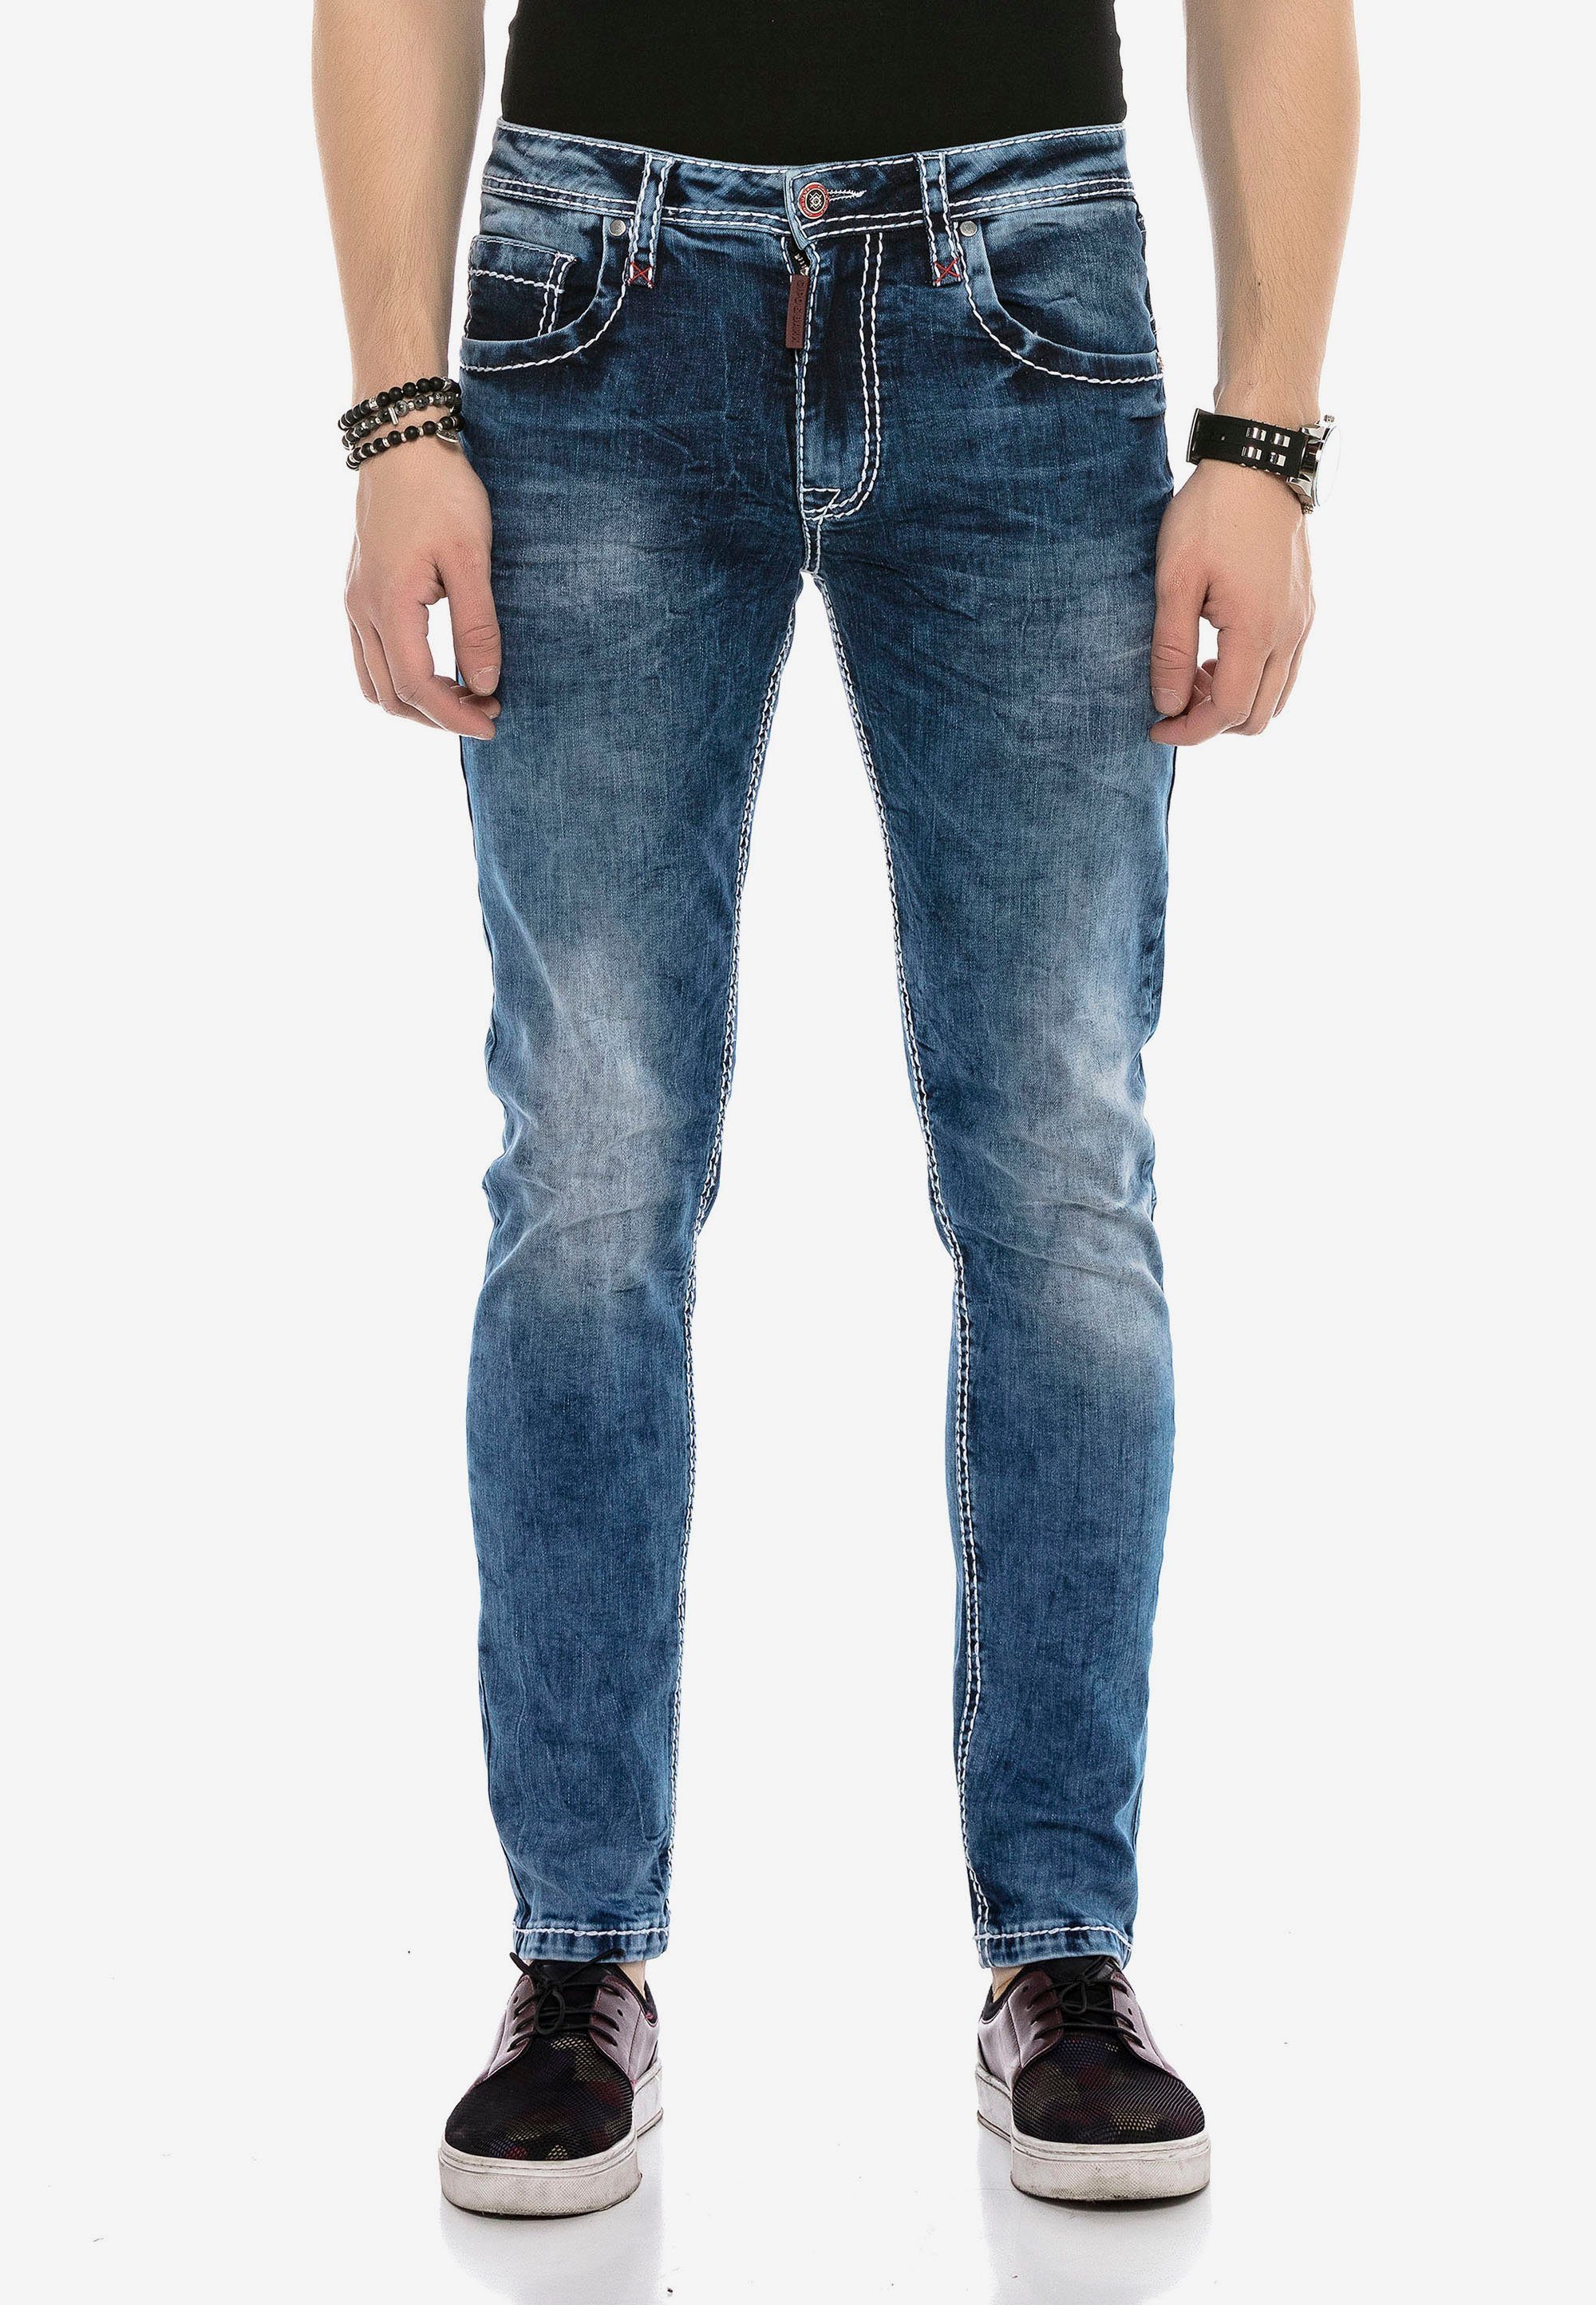 klassischem Jeans in Baxx Bequeme & Cipo Design